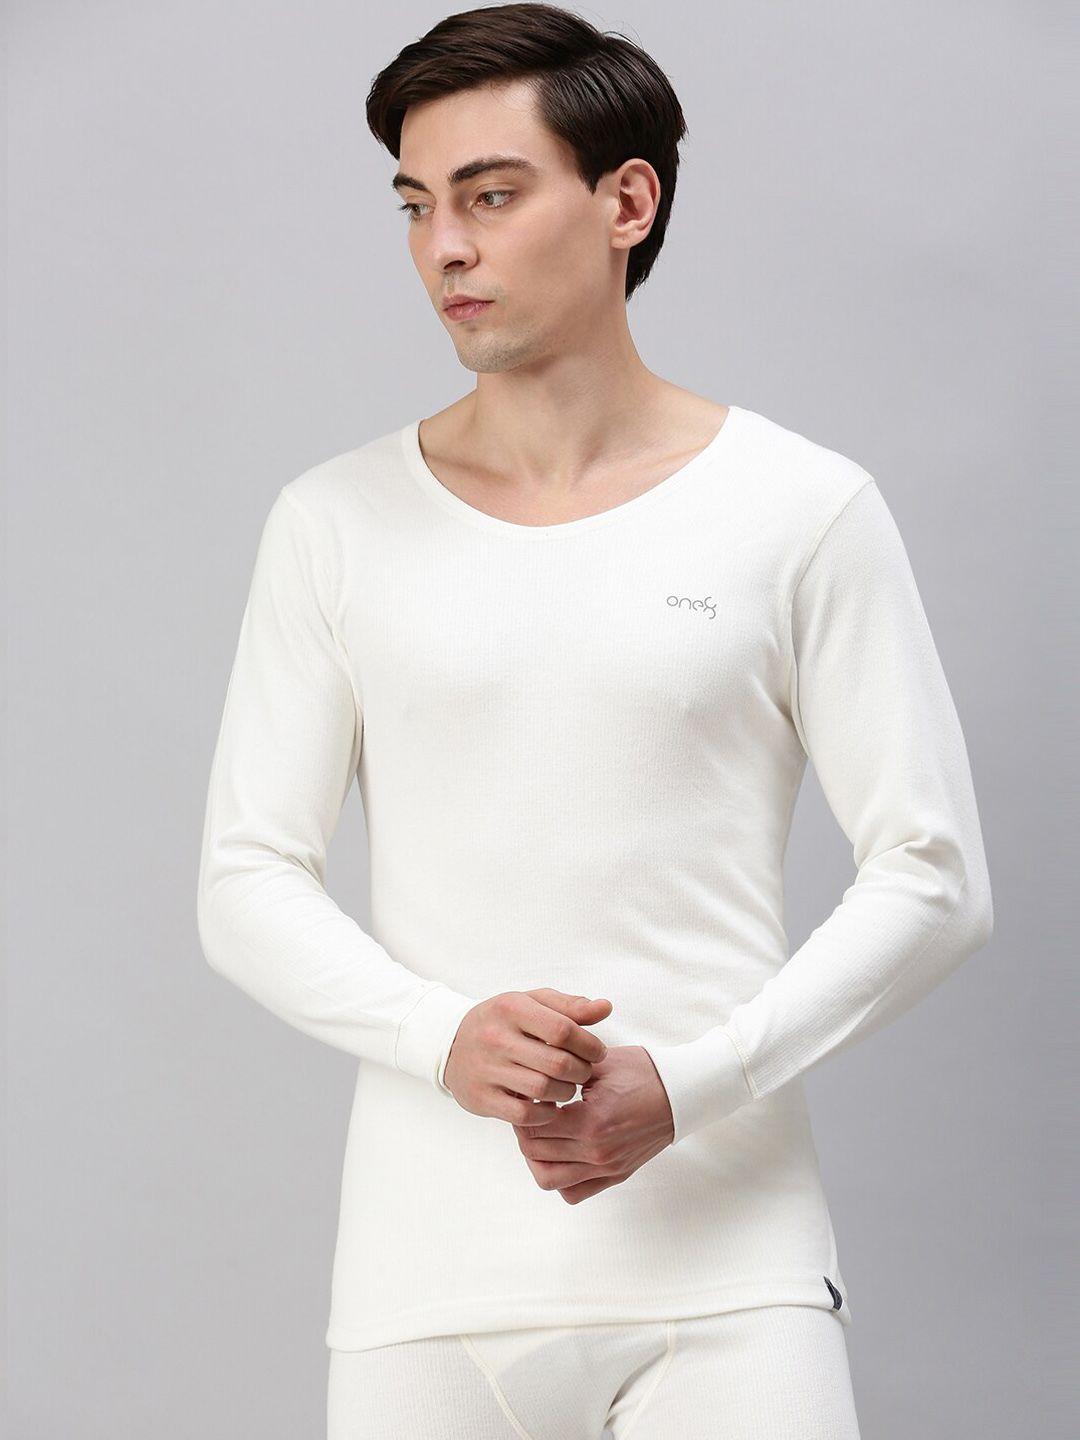 one8 by virat kohli men white solid cotton thermal tops